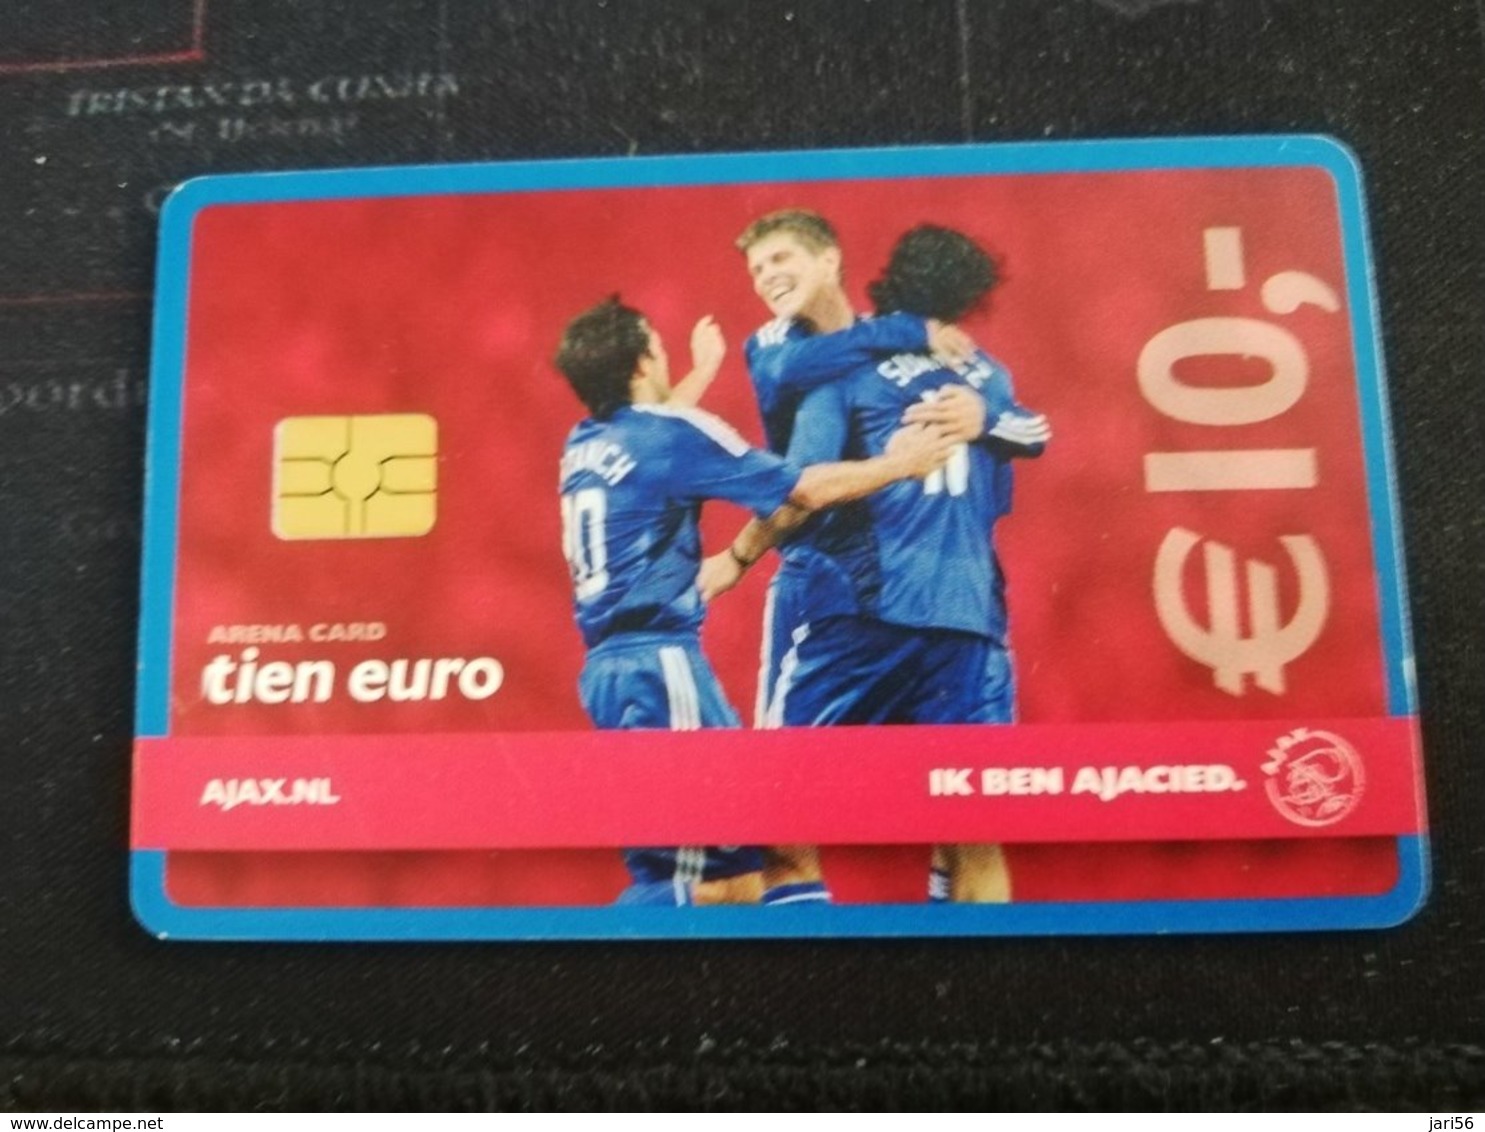 NETHERLANDS  ARENA CARD FOOTBAL/SOCCER  AJAX AMSTERDAM €10, HUNTELAAR/SOUAREZ USED CARD  ** 1418 ** - Publiques